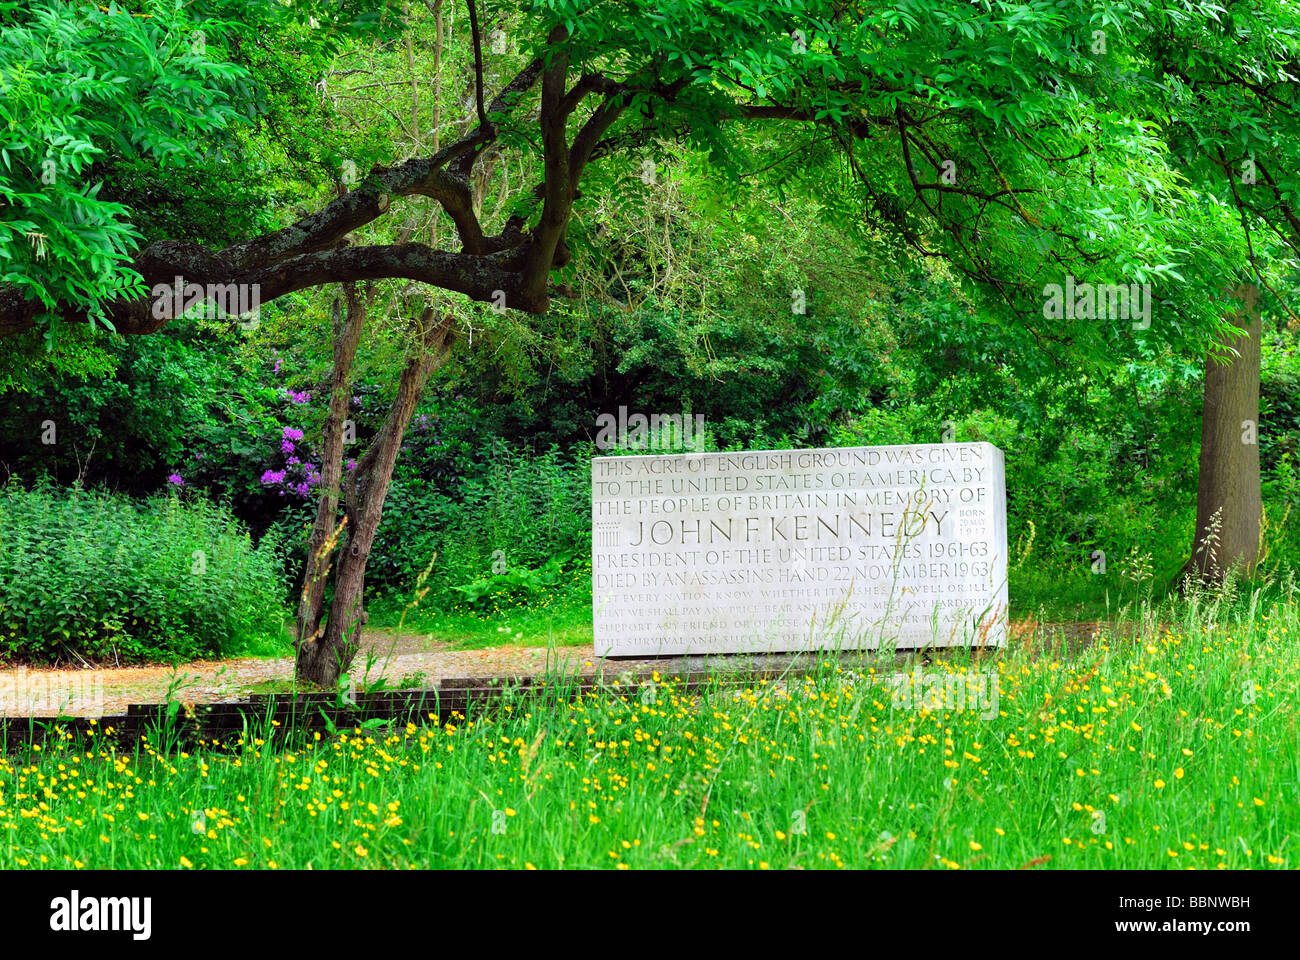 President Kennedy Memorial in Runnymede Egham Surrey England Stockfoto